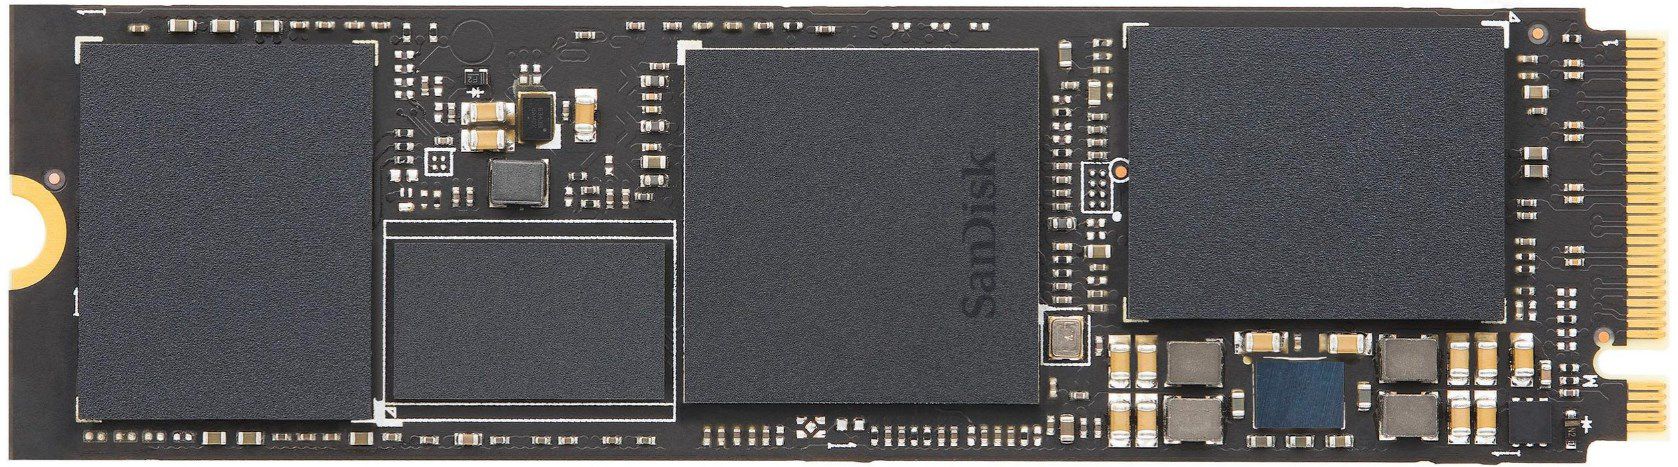 Sandisk Extreme PRO M.2 NVMe 3D interne SSD mit 1TB ab 89,99€ (statt 112€)